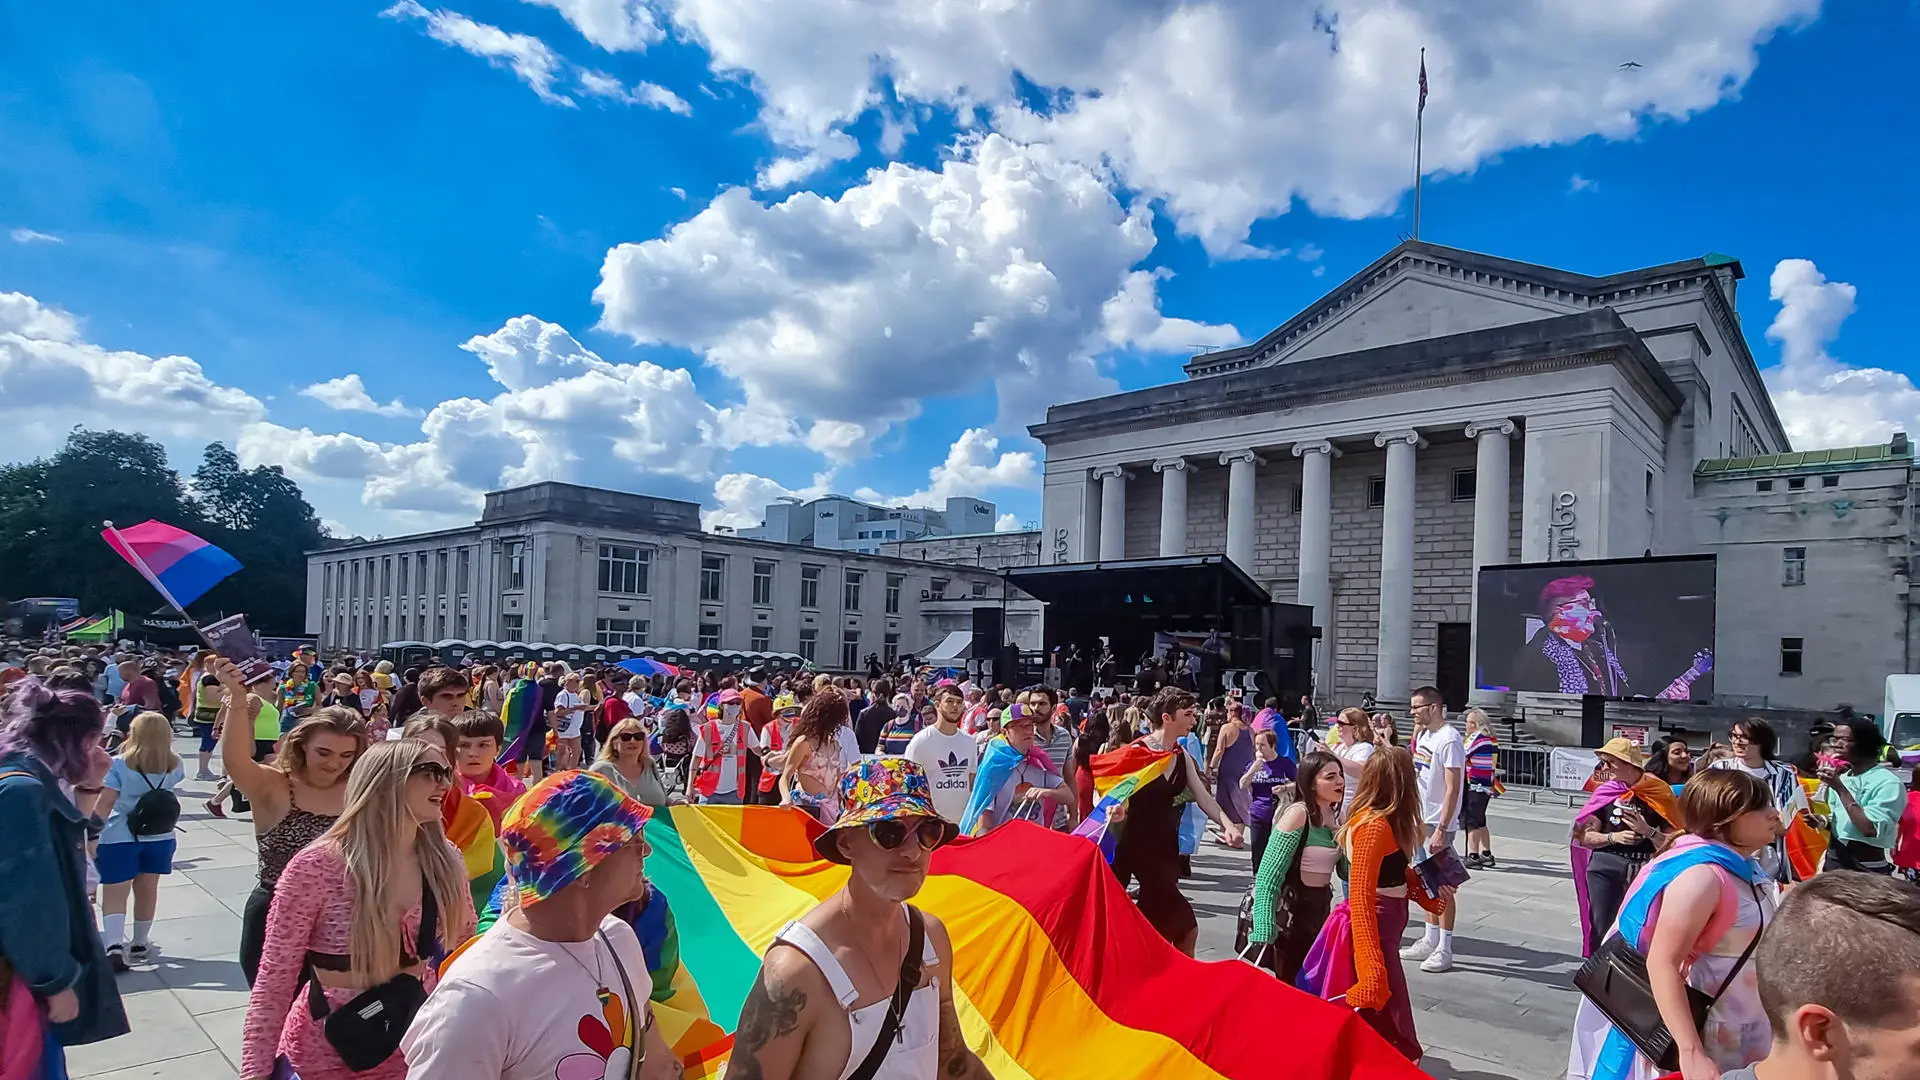 Southampton Pride parade passing through Guildhall Square